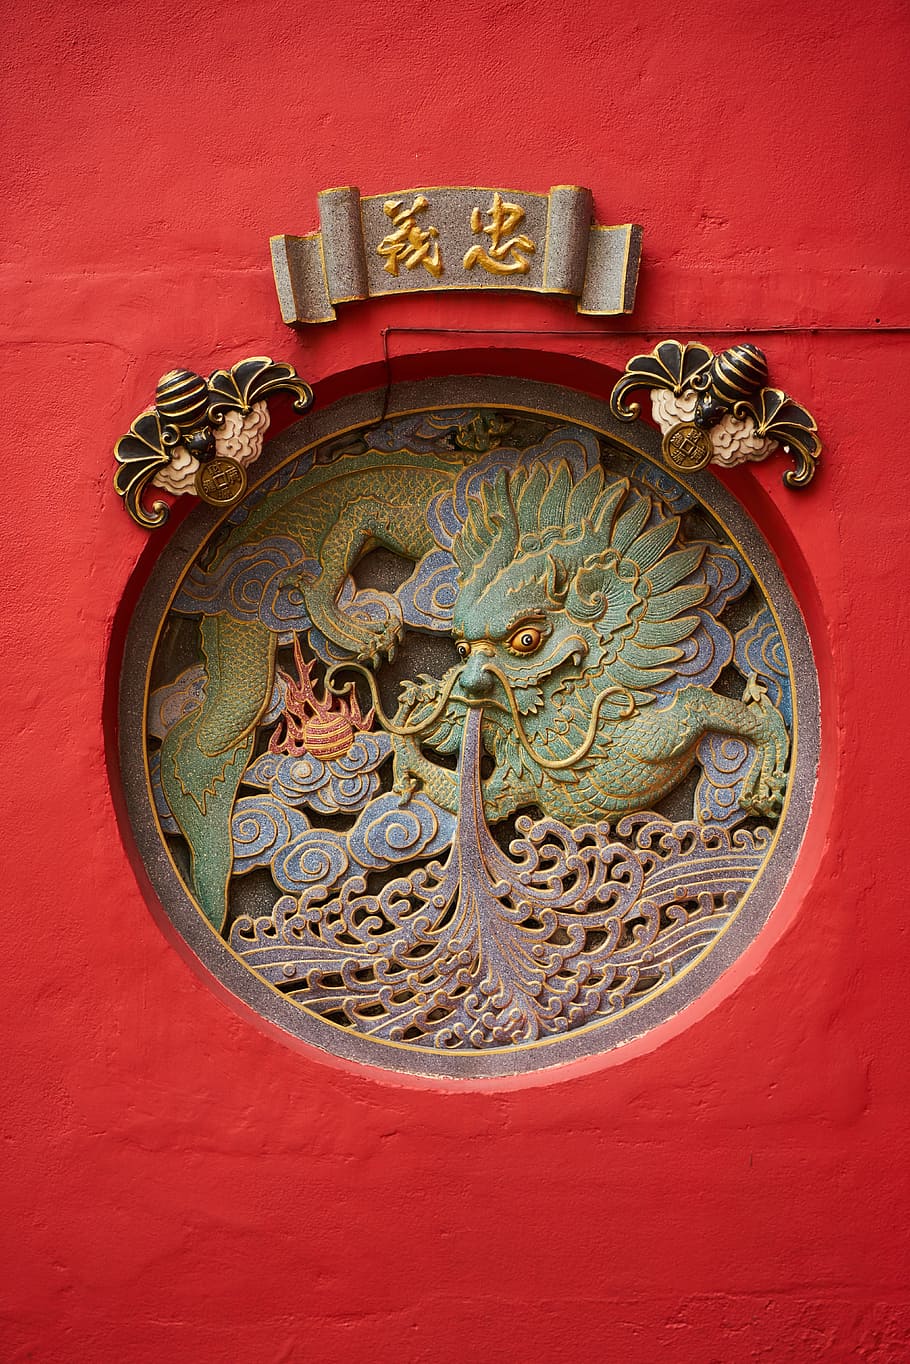 hijau, abu-abu, naga emboss karya seni, simbol, antik, tua, merah, naga, Cina, candi